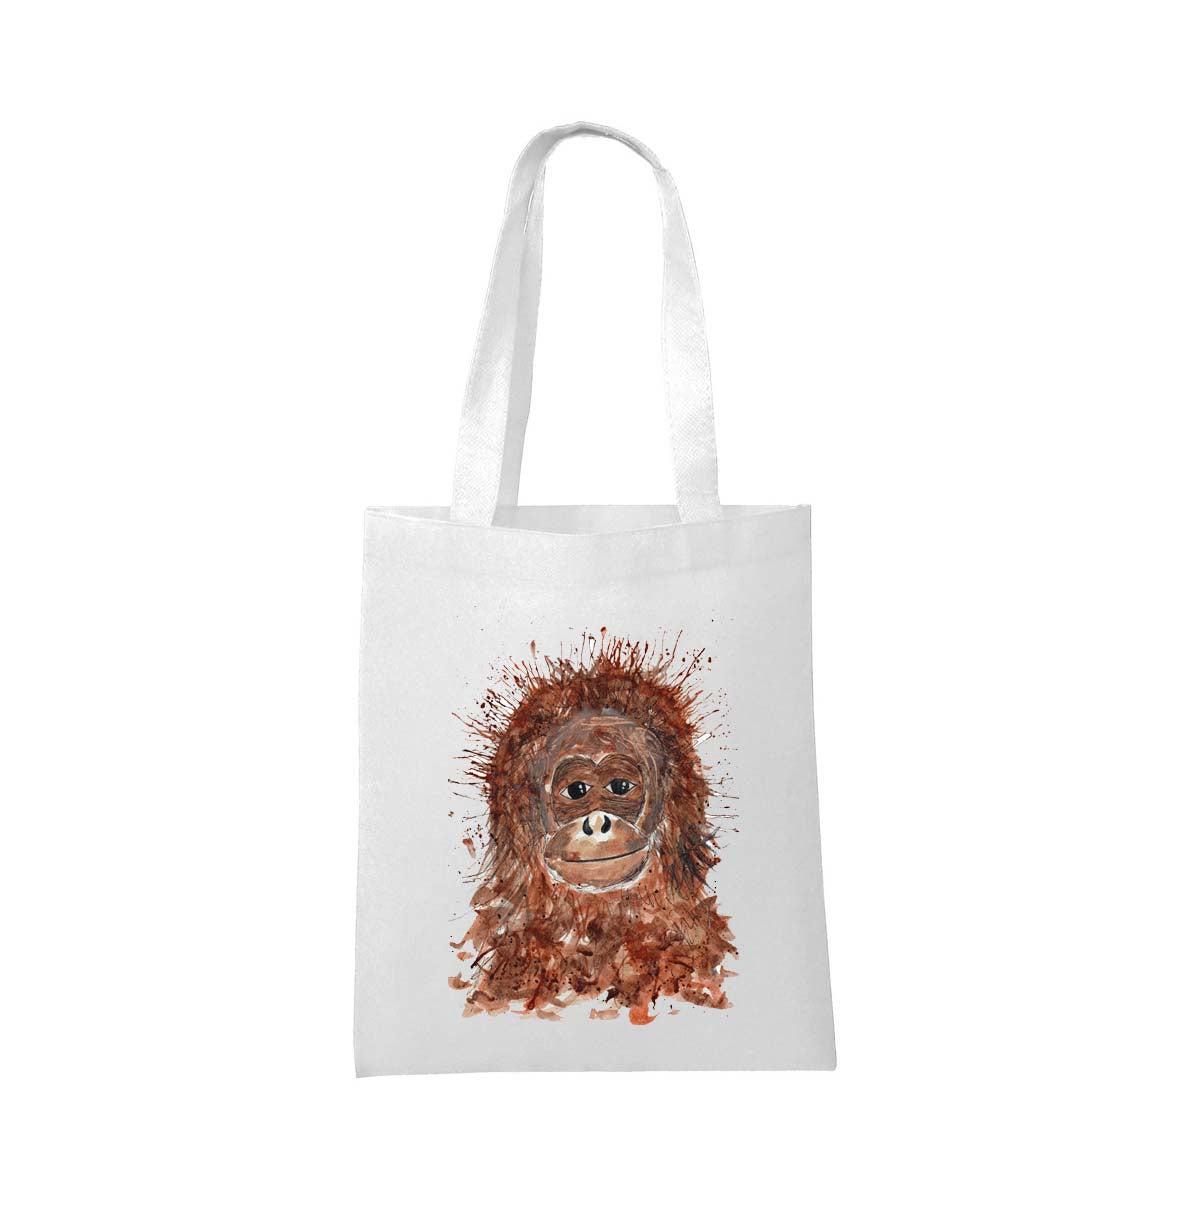 Orangutan Tote shopping bag